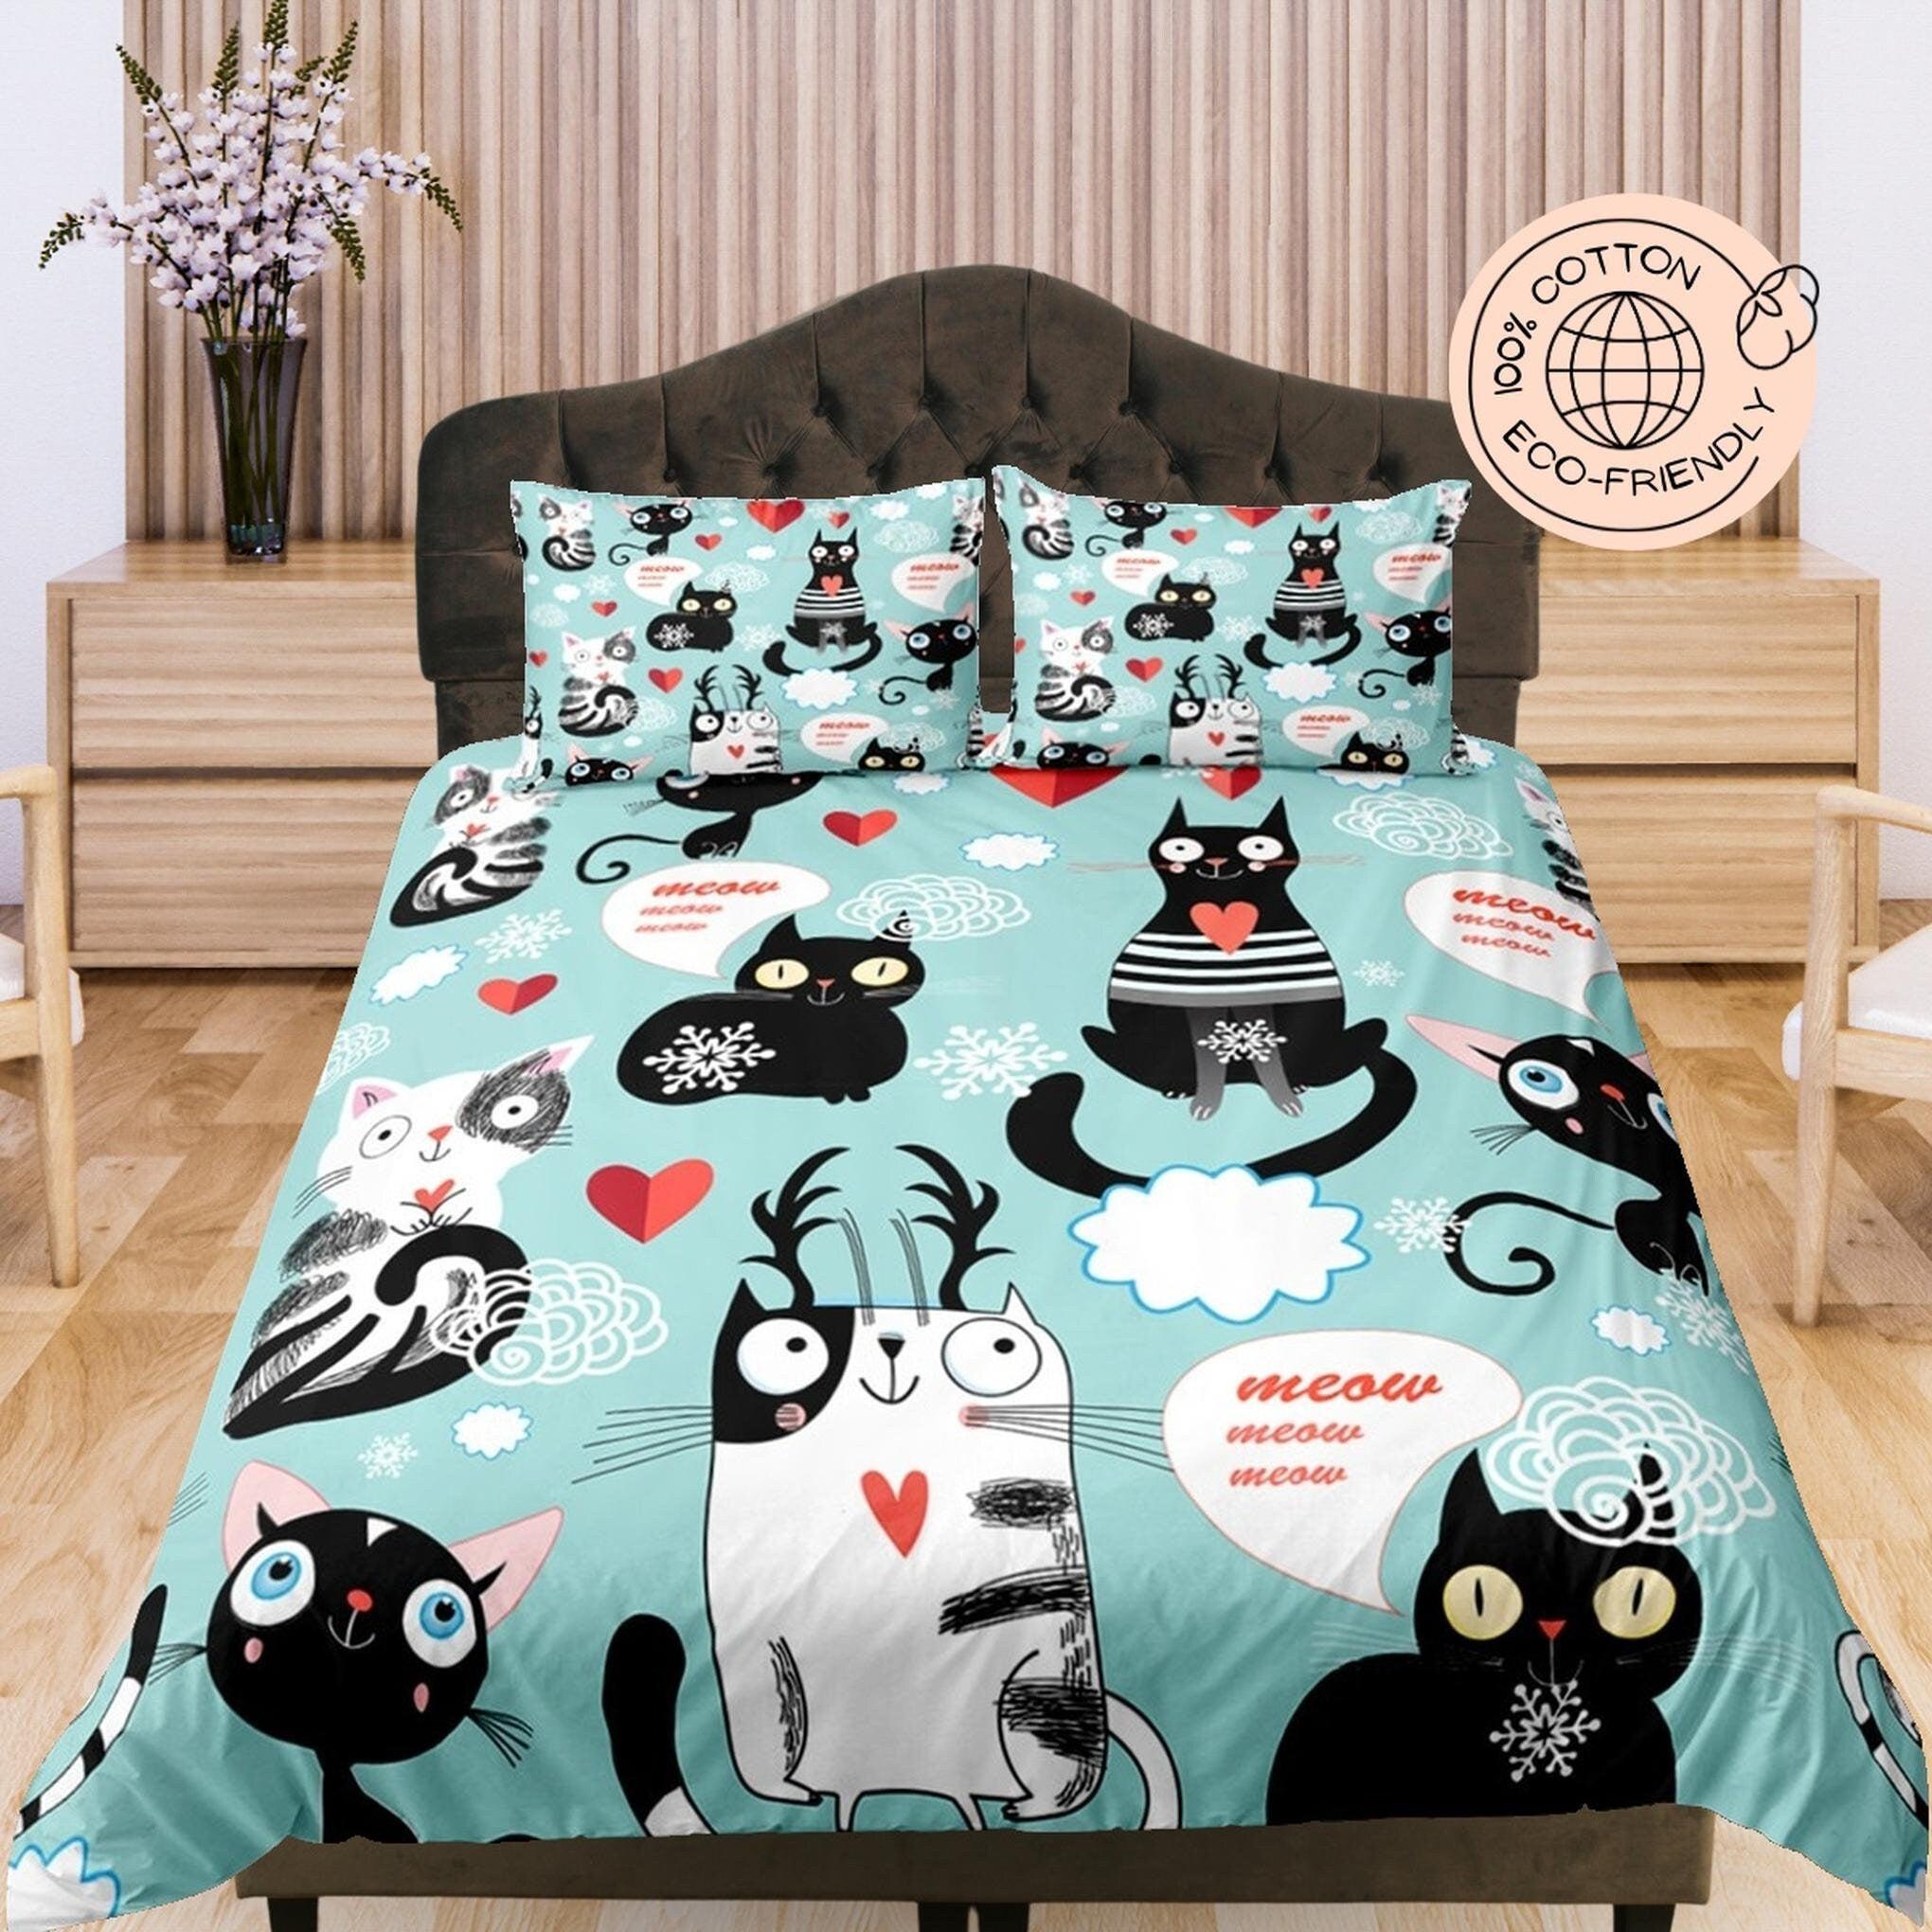 daintyduvet Cute Playful Cats, Hearts, Cyan Cotton Duvet Cover Set for Kids, Toddler Bedding, Baby Zipper Bedding, Nursery Cotton Bedding, Crib Blanket